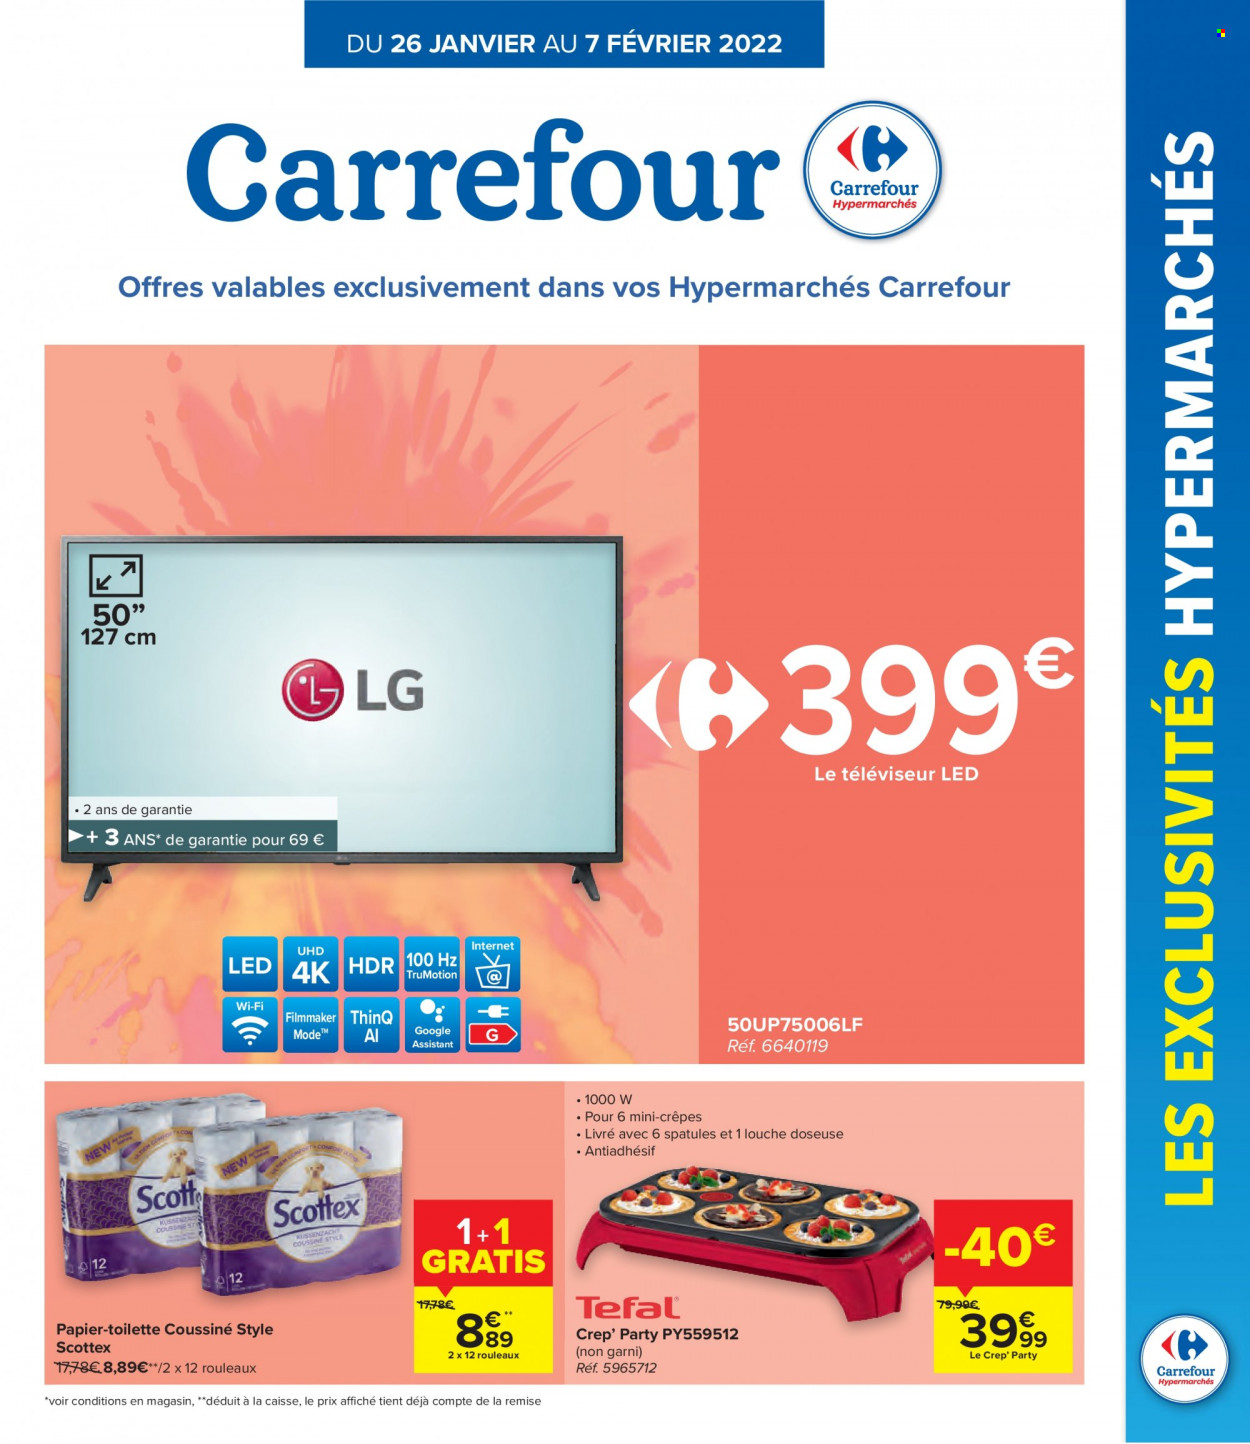 thumbnail - Carrefour hypermarkt-aanbieding - 26/01/2022 - 07/02/2022 -  producten in de aanbieding - Tefal, LG. Pagina 1.